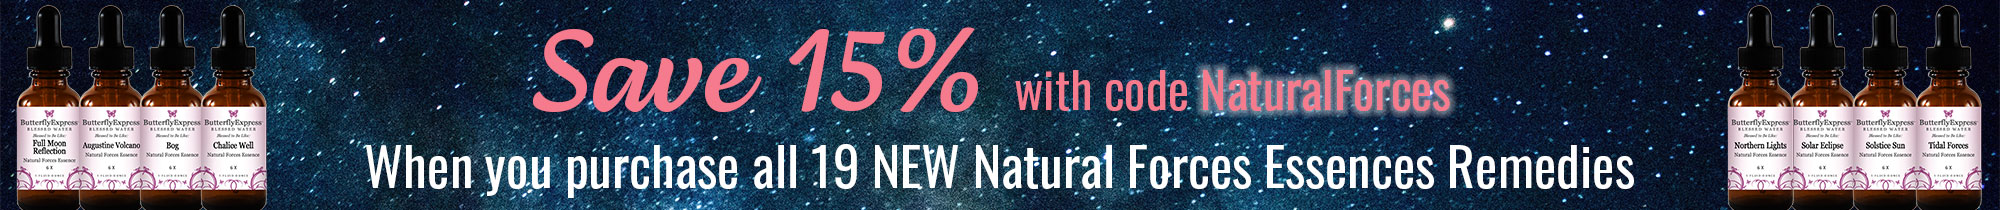 15% off Natural Forces Essences Collection